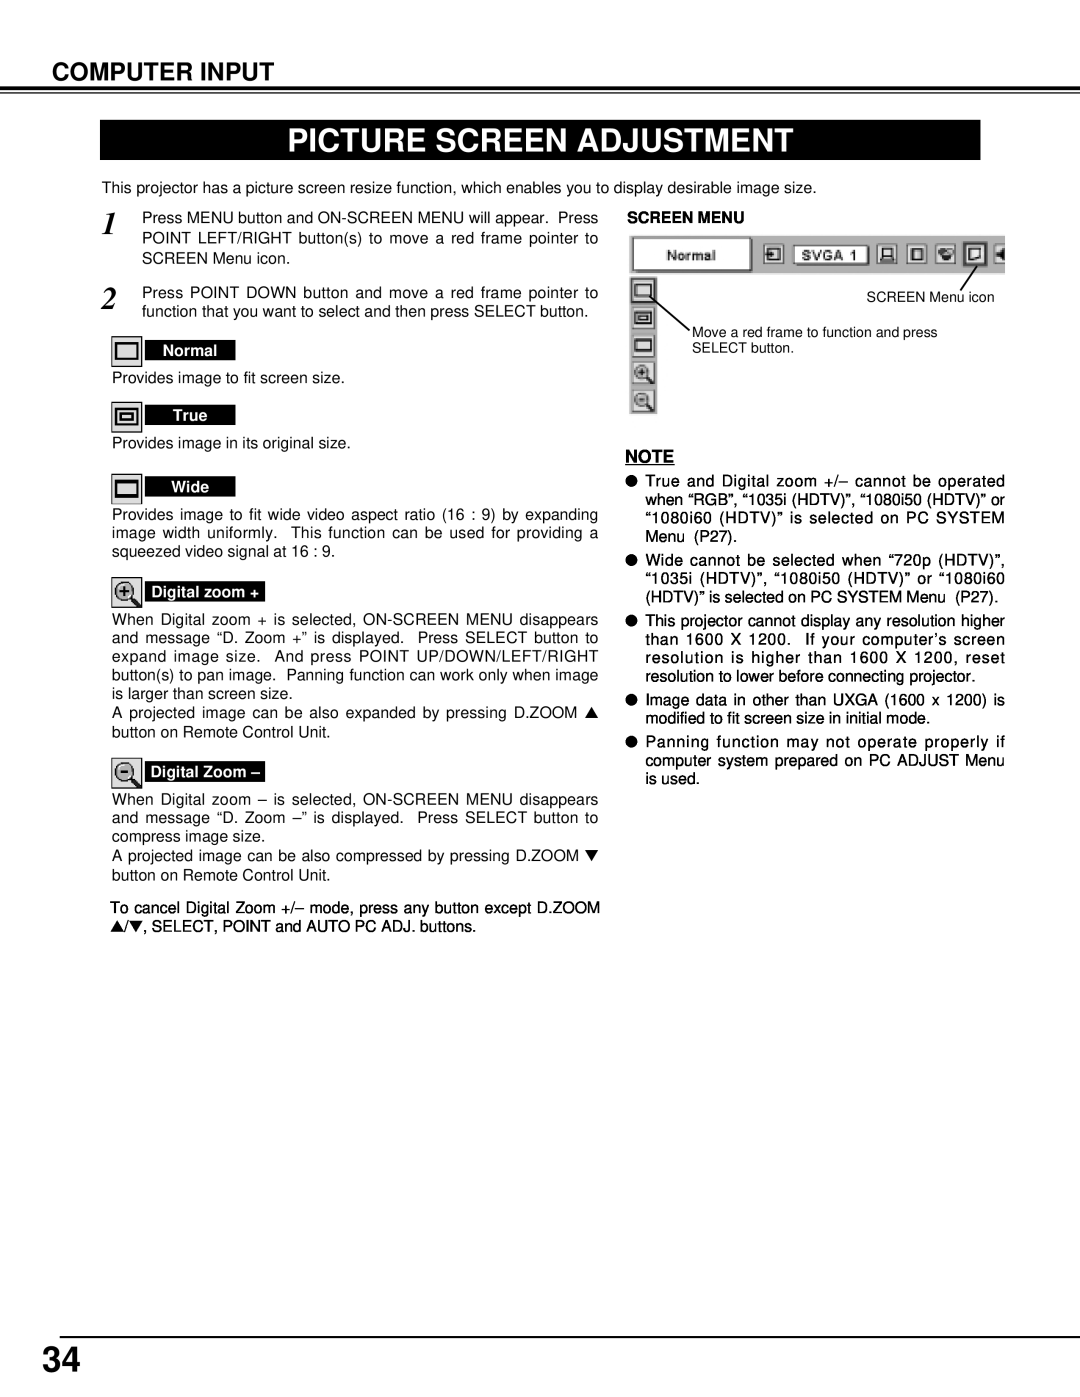 Eiki LC-UXT1 instruction manual Picture Screen Adjustment, Computer Input, Screen Menu 